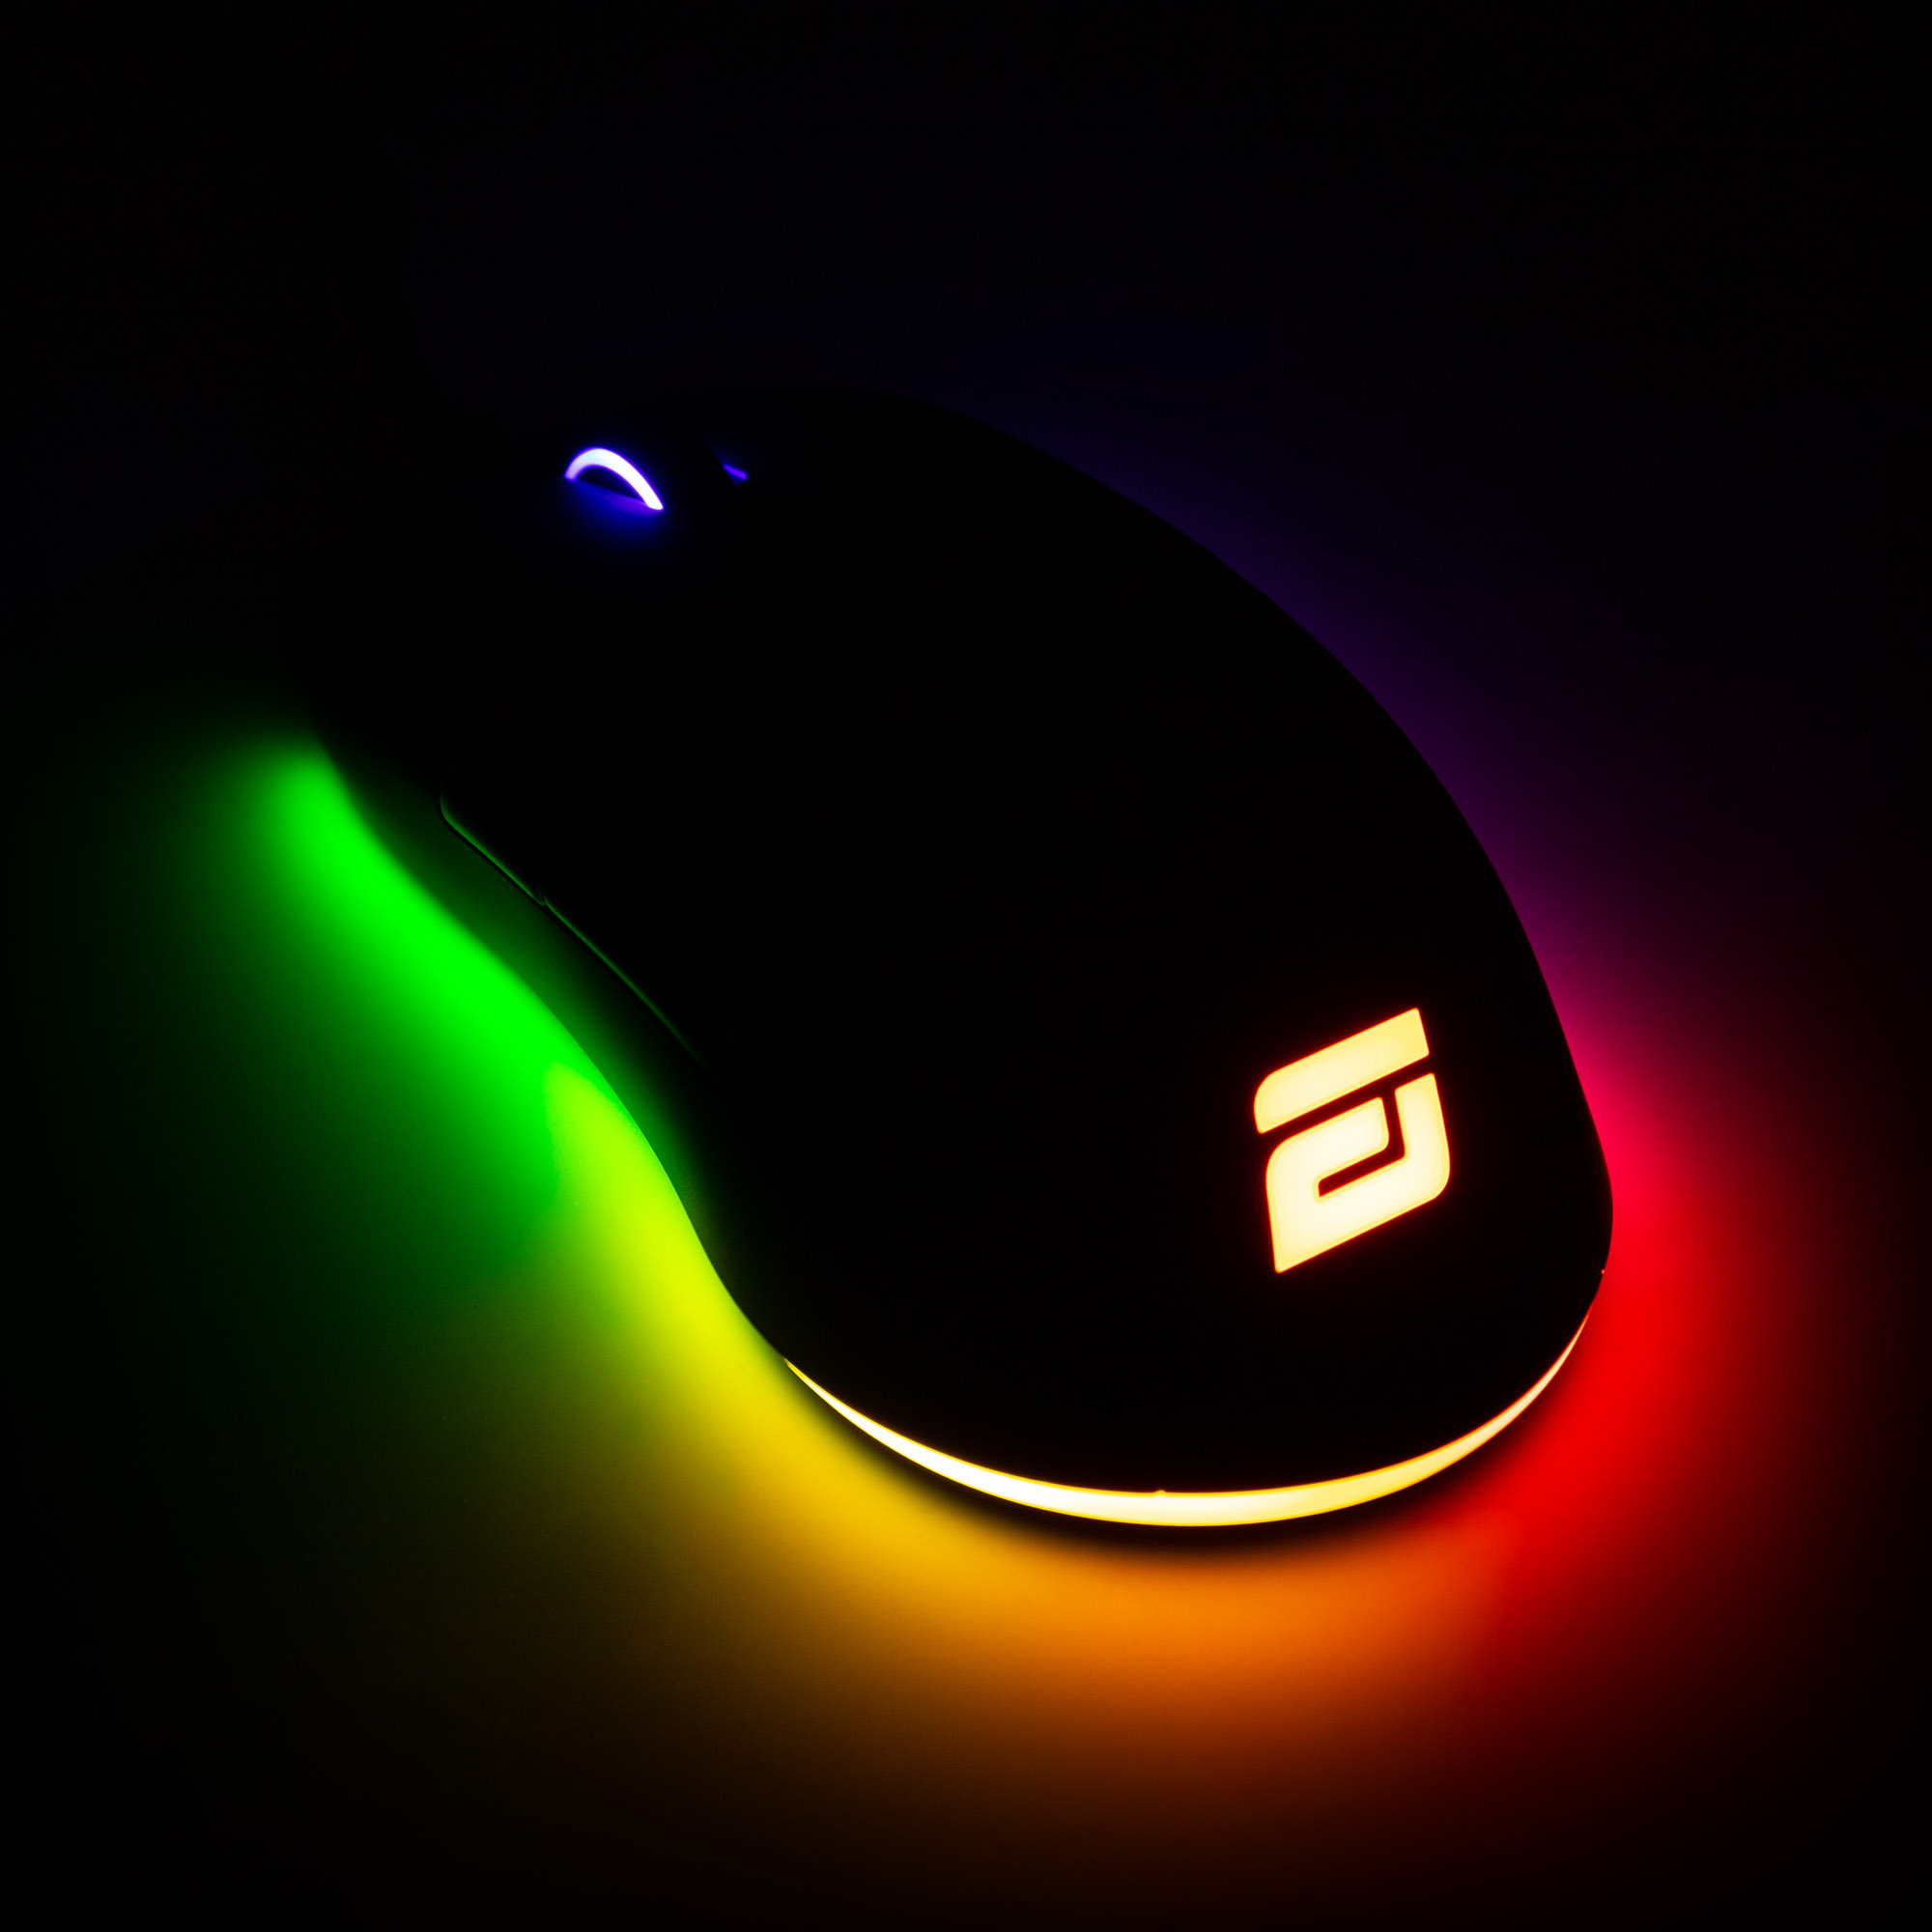 Endgame Gear - Endgame Gear XM1-RGB USB RGB Optical esports Performance Gaming Mouse - White (EGG-XM1RGB-WHT)